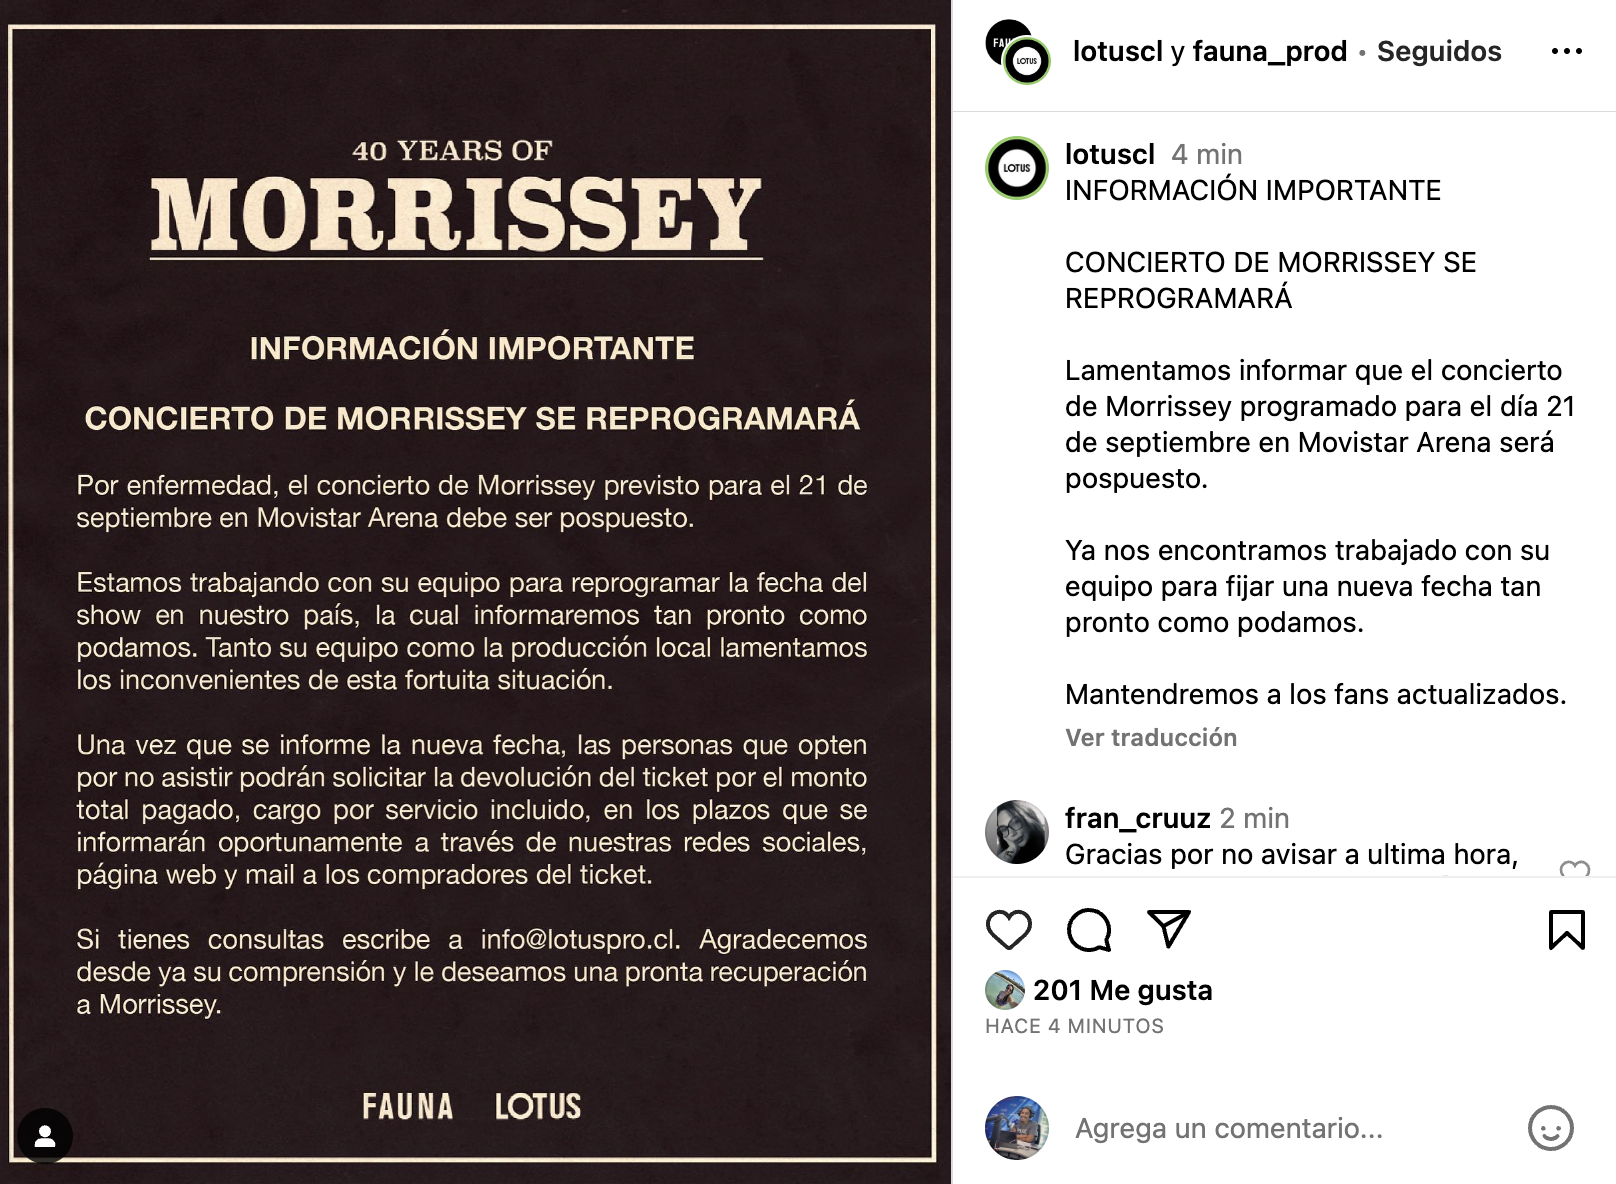 Show de Morrissey en Chile suspendido